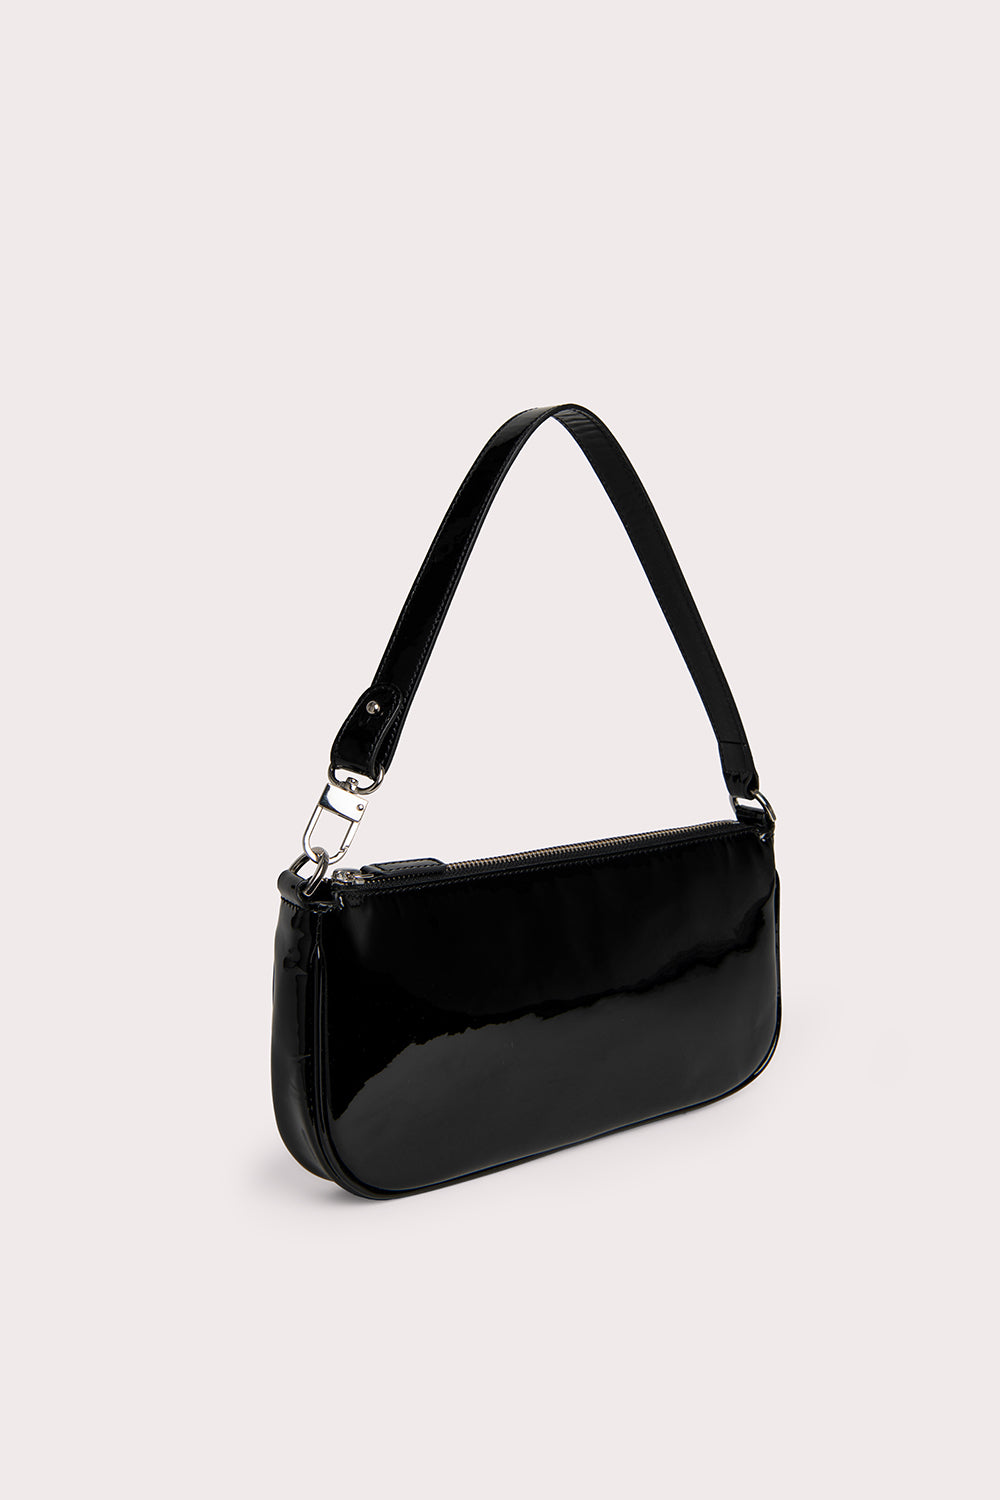 black patent leather purse